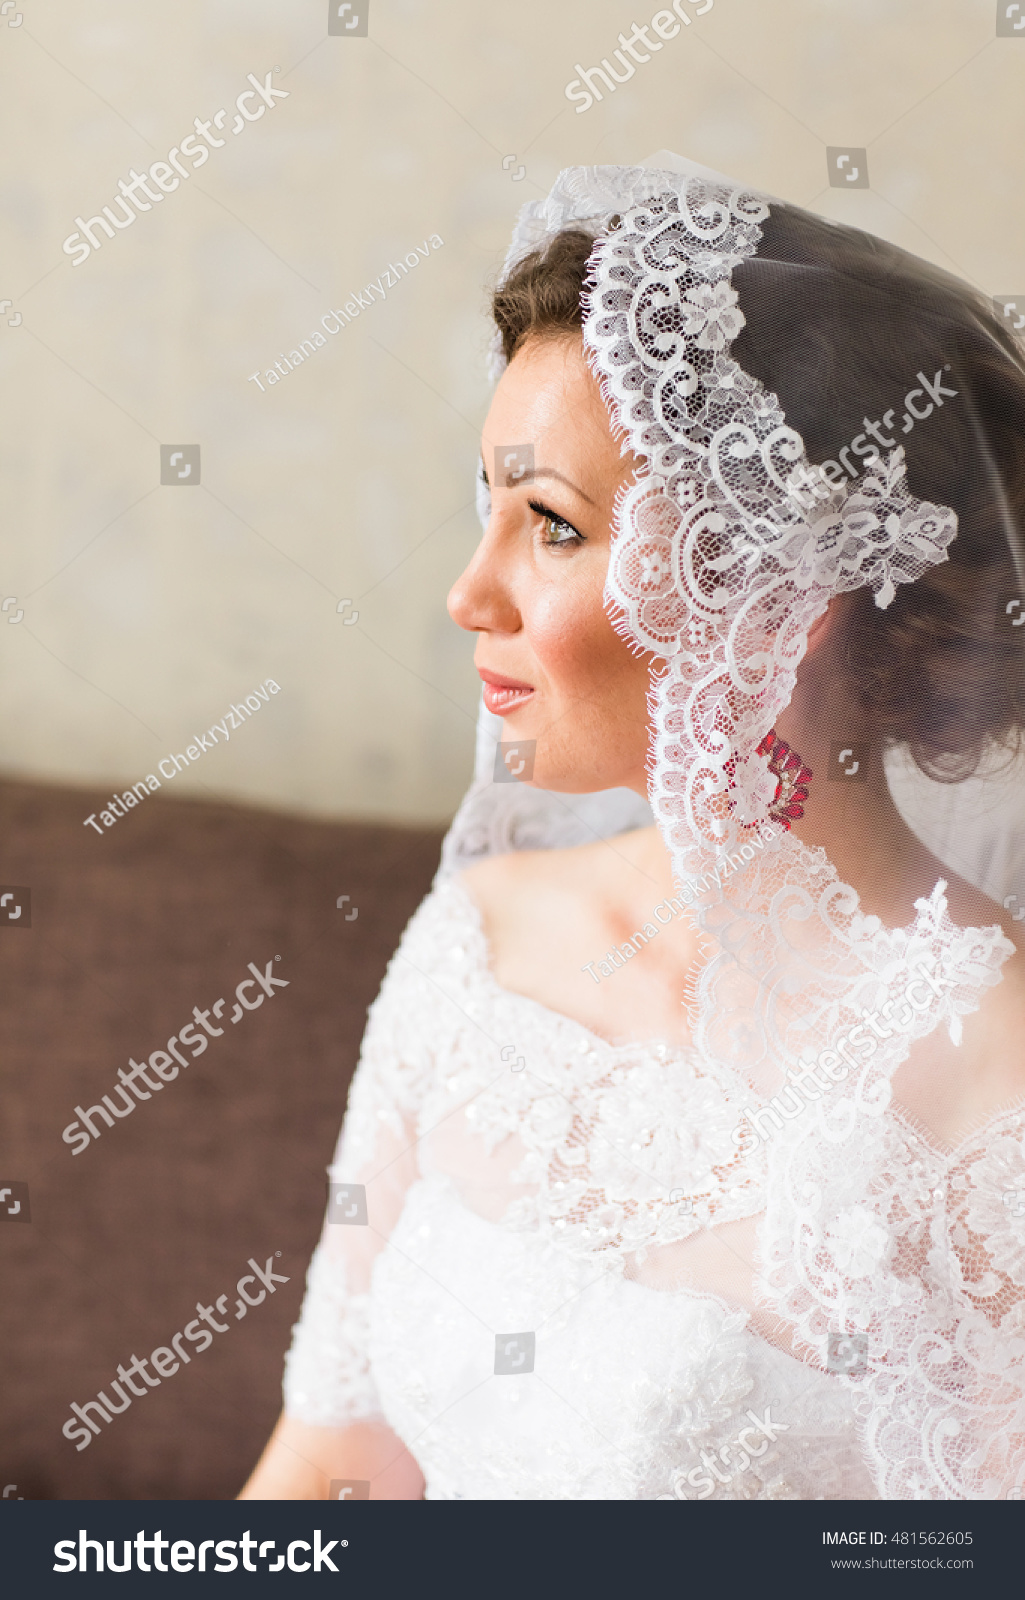 Beautiful Bride Photos Shutterstock 103